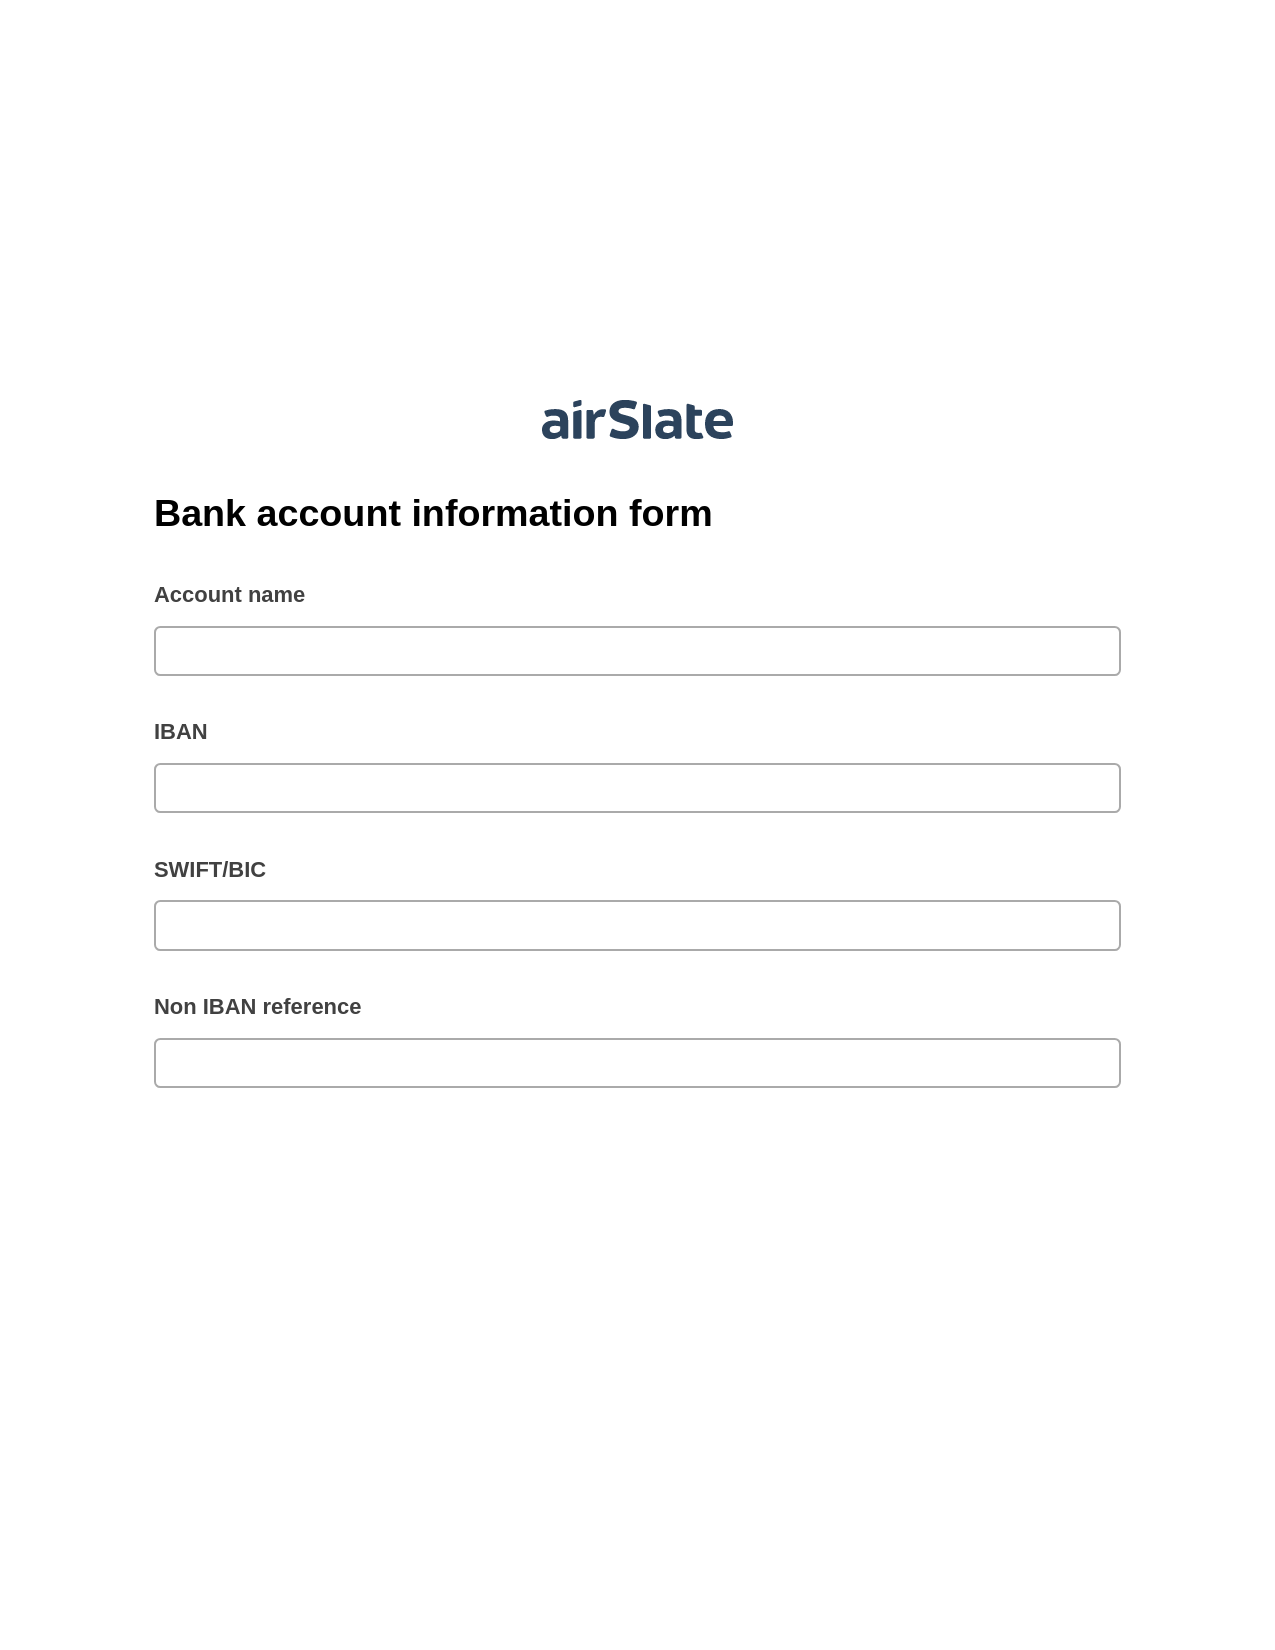 Multirole Bank account information form Pre-fill from Google Sheet Dropdown Options Bot, Webhook Bot, Export to Google Sheet Bot